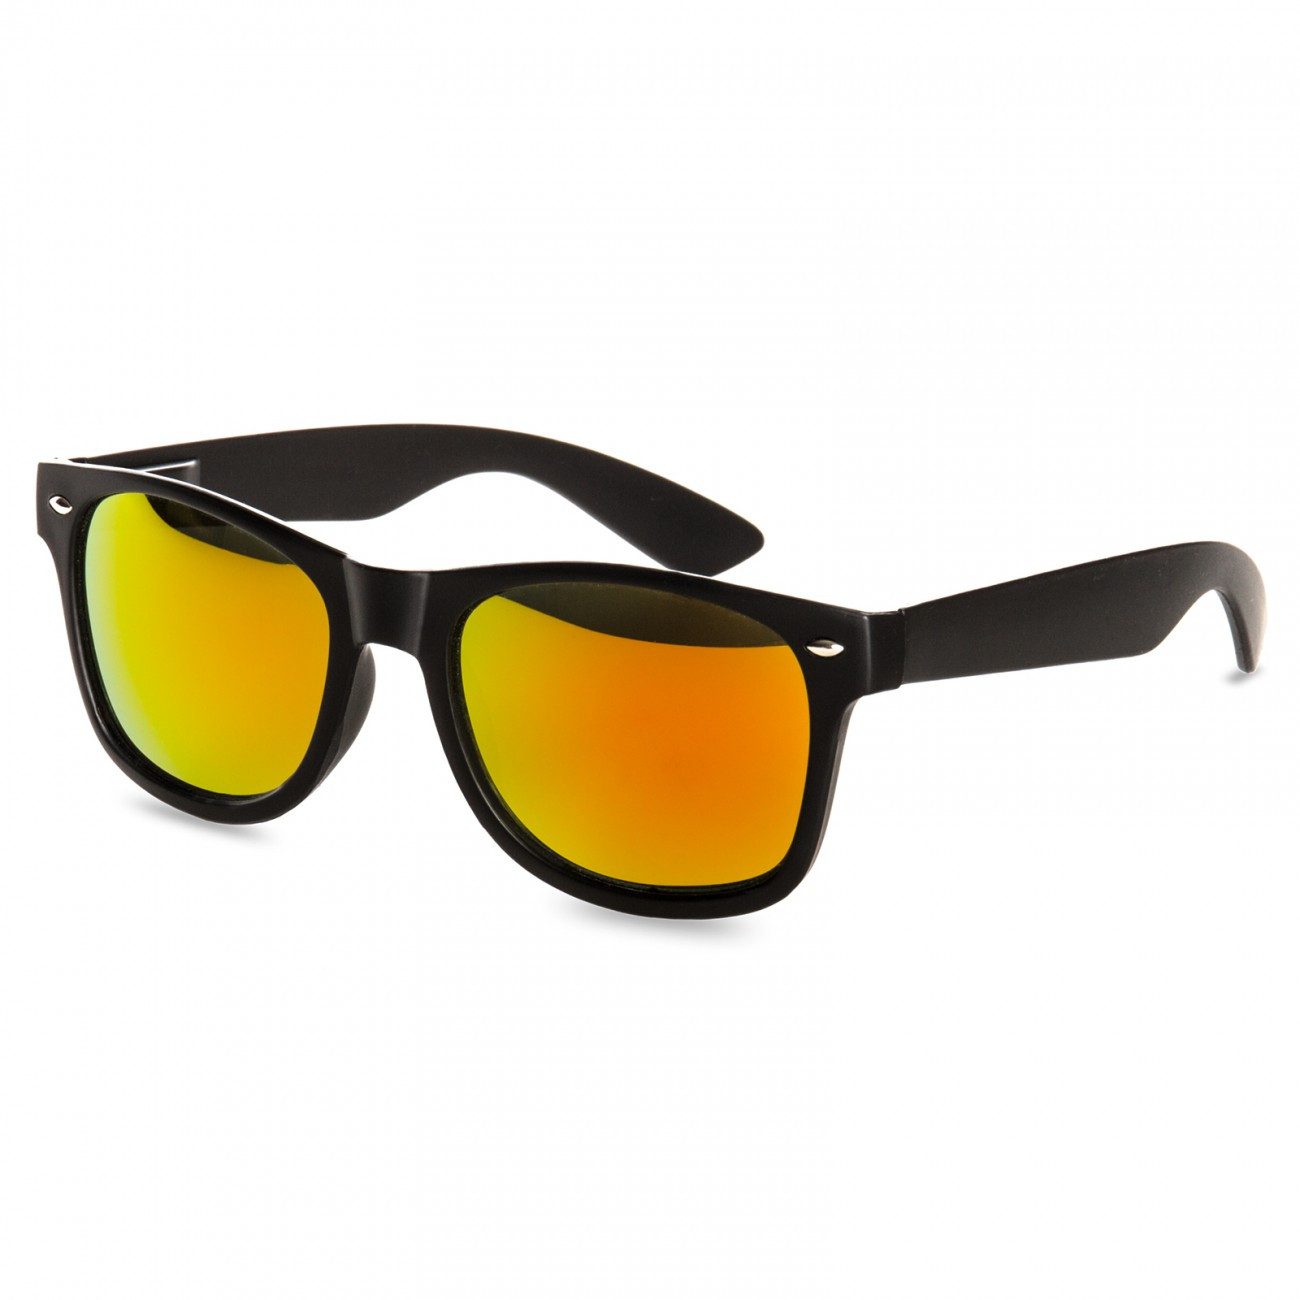 Caspar Sonnenbrille SG020 klassische Unisex Retro Sonnenbrille